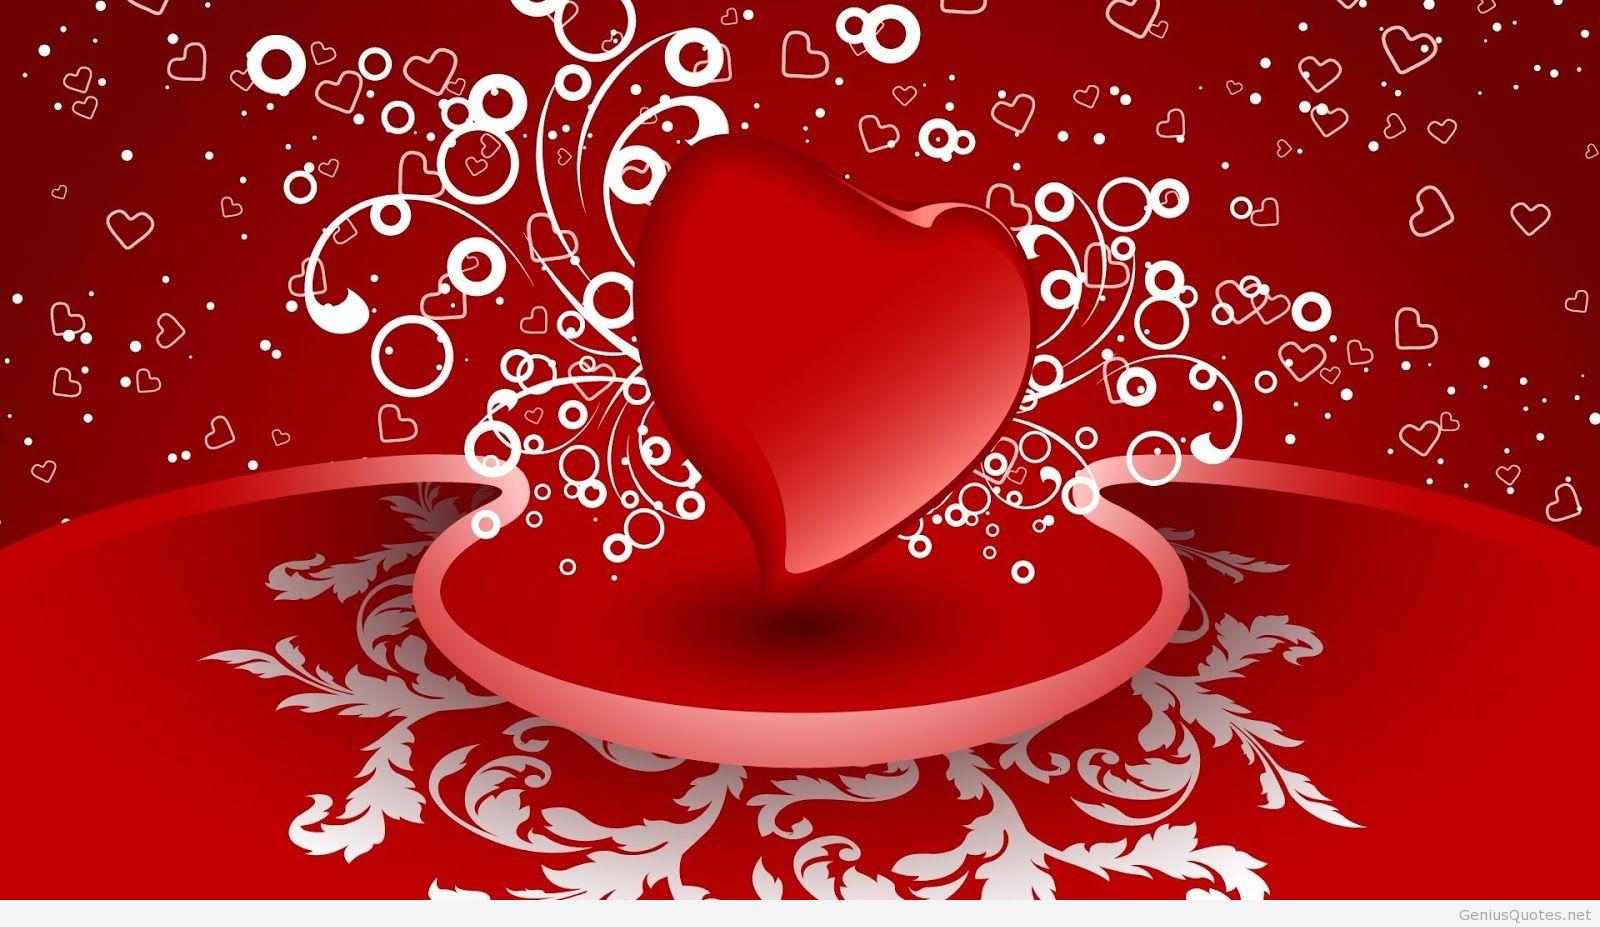 Heart Valentines day wallpaper 2014